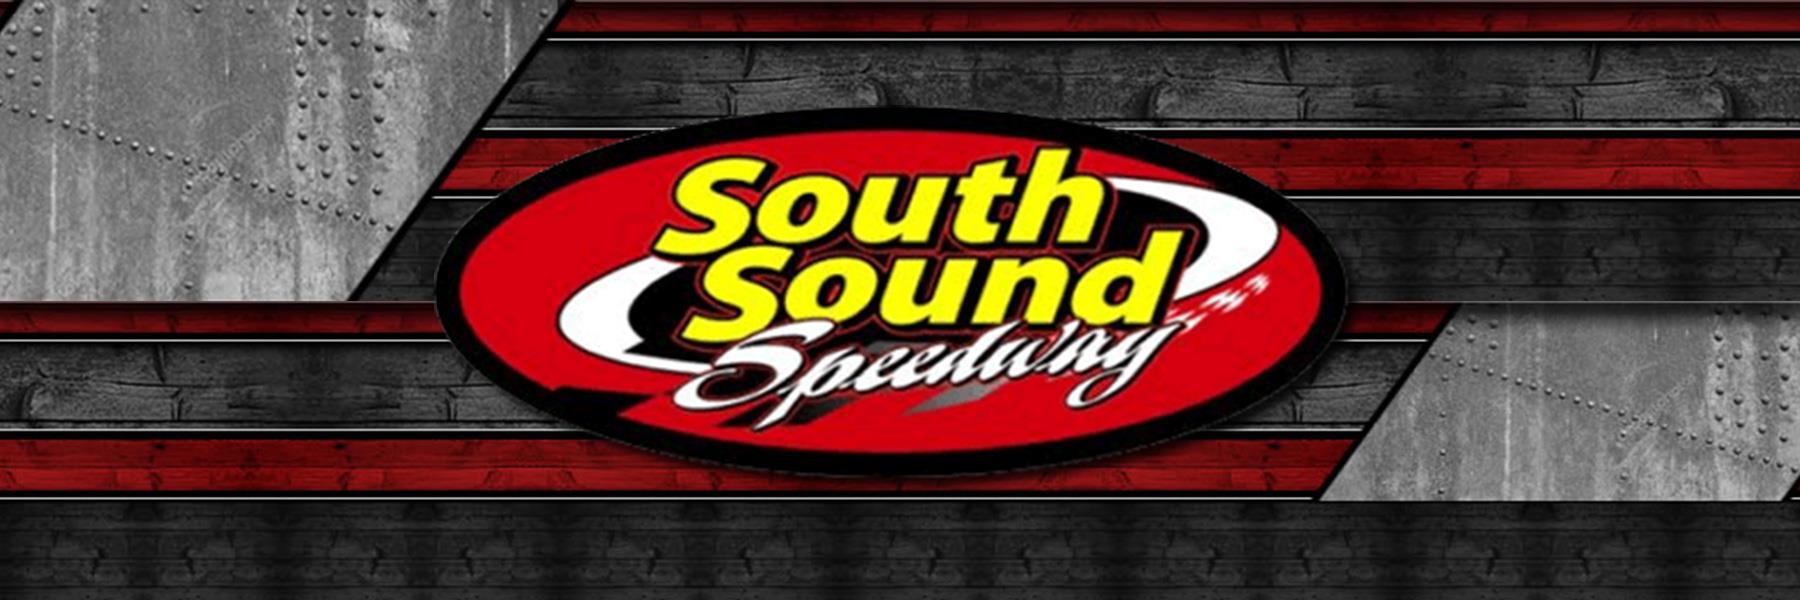 6/4/2022 - South Sound Speedway